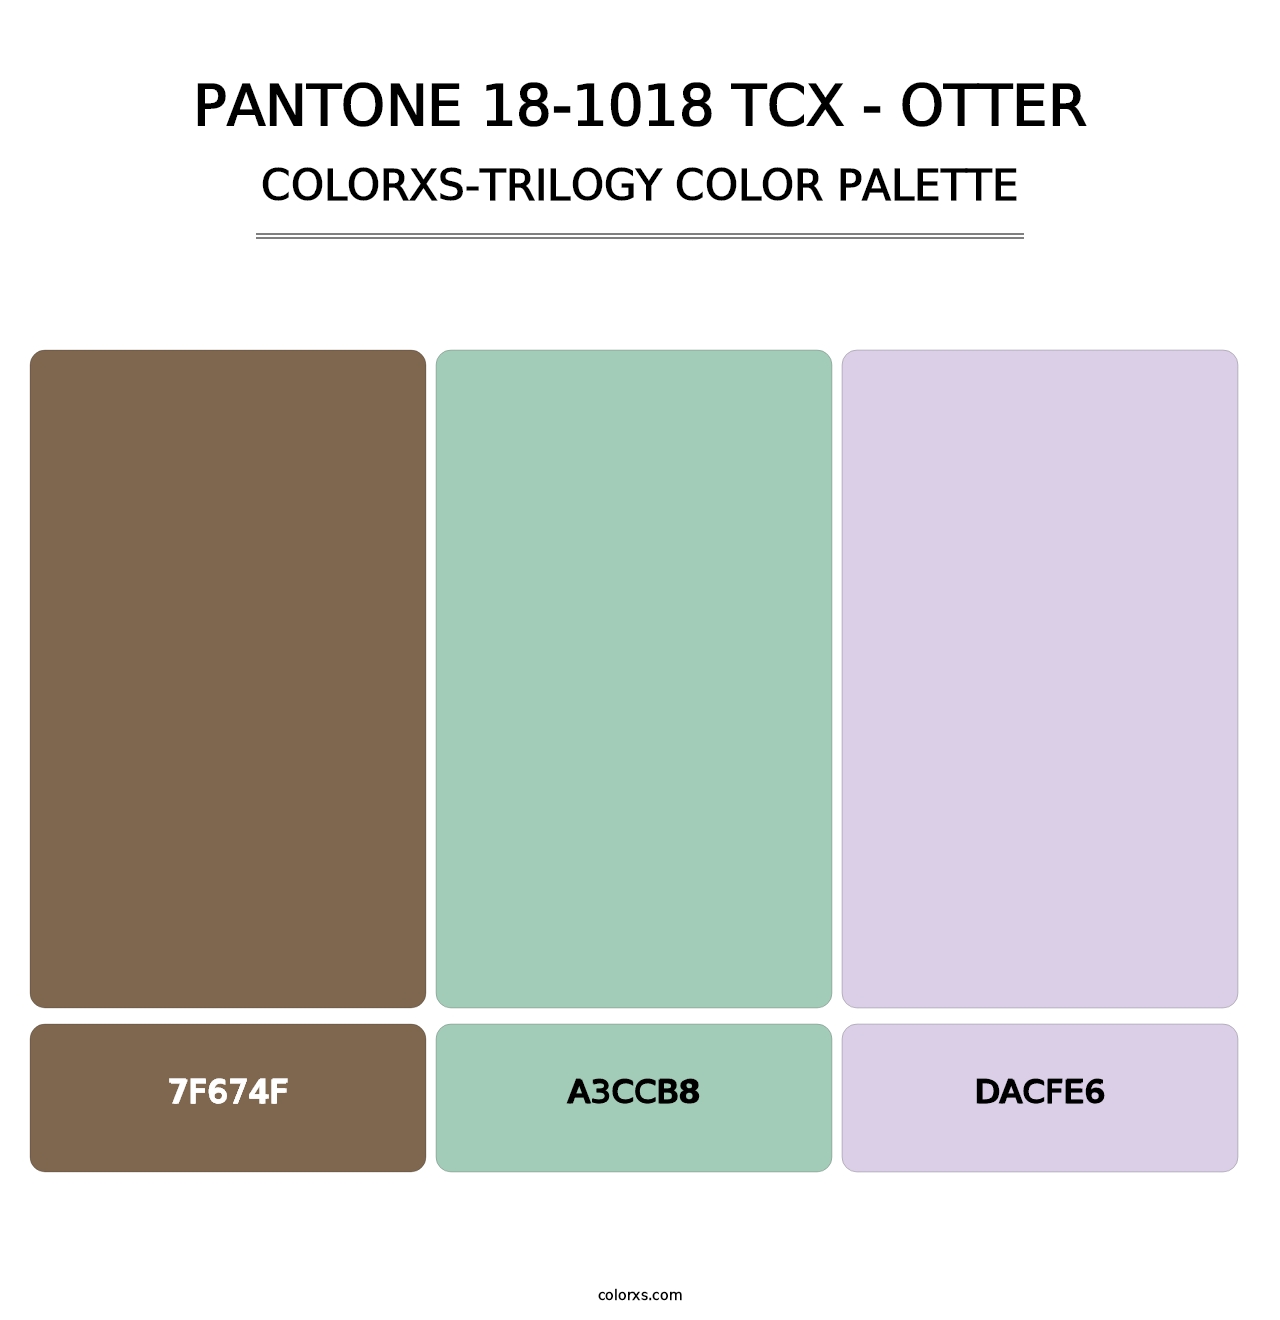 PANTONE 18-1018 TCX - Otter - Colorxs Trilogy Palette